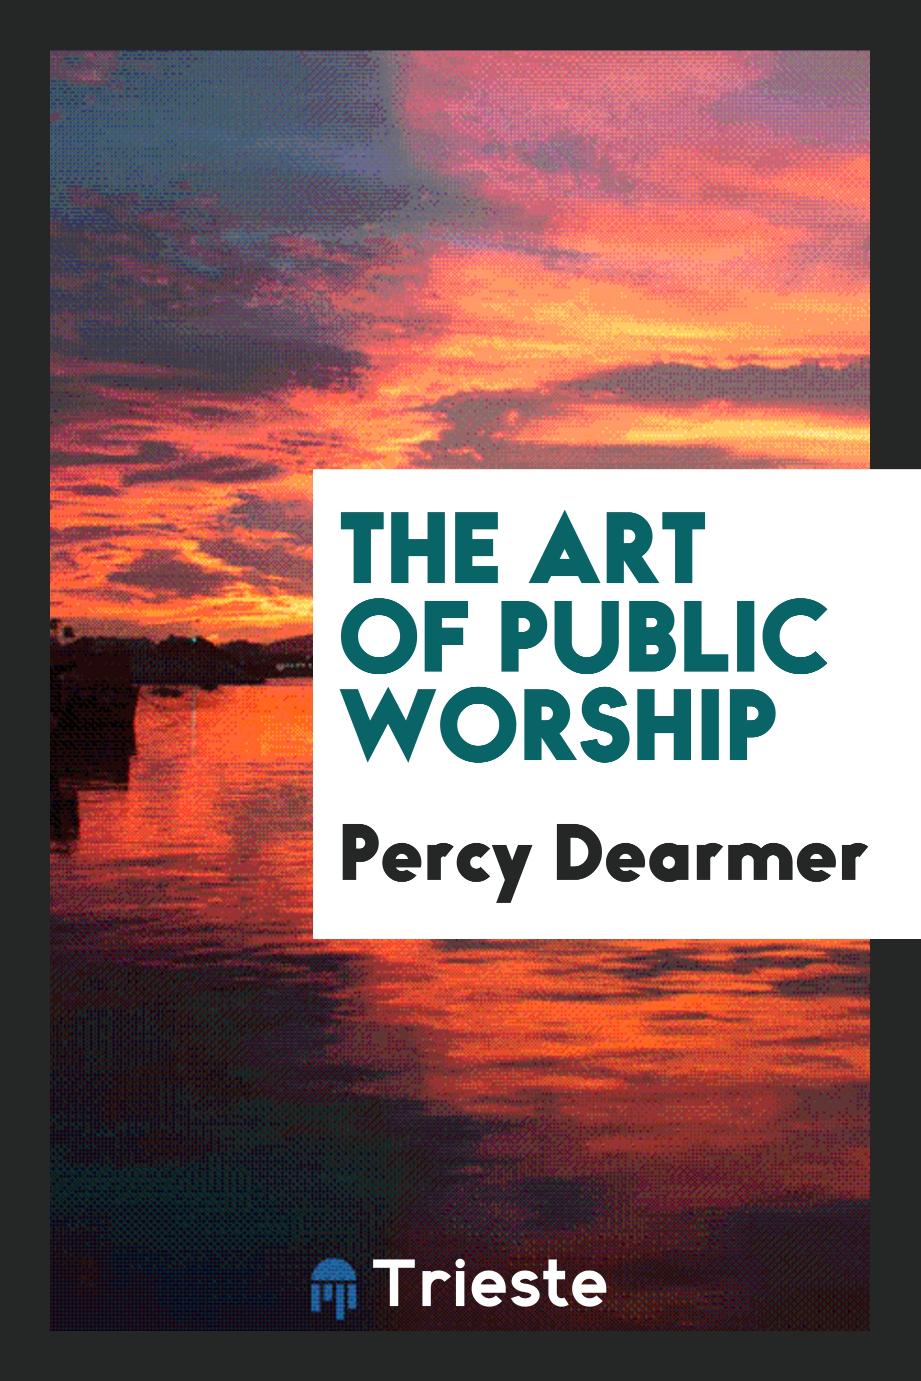 The art of public worship